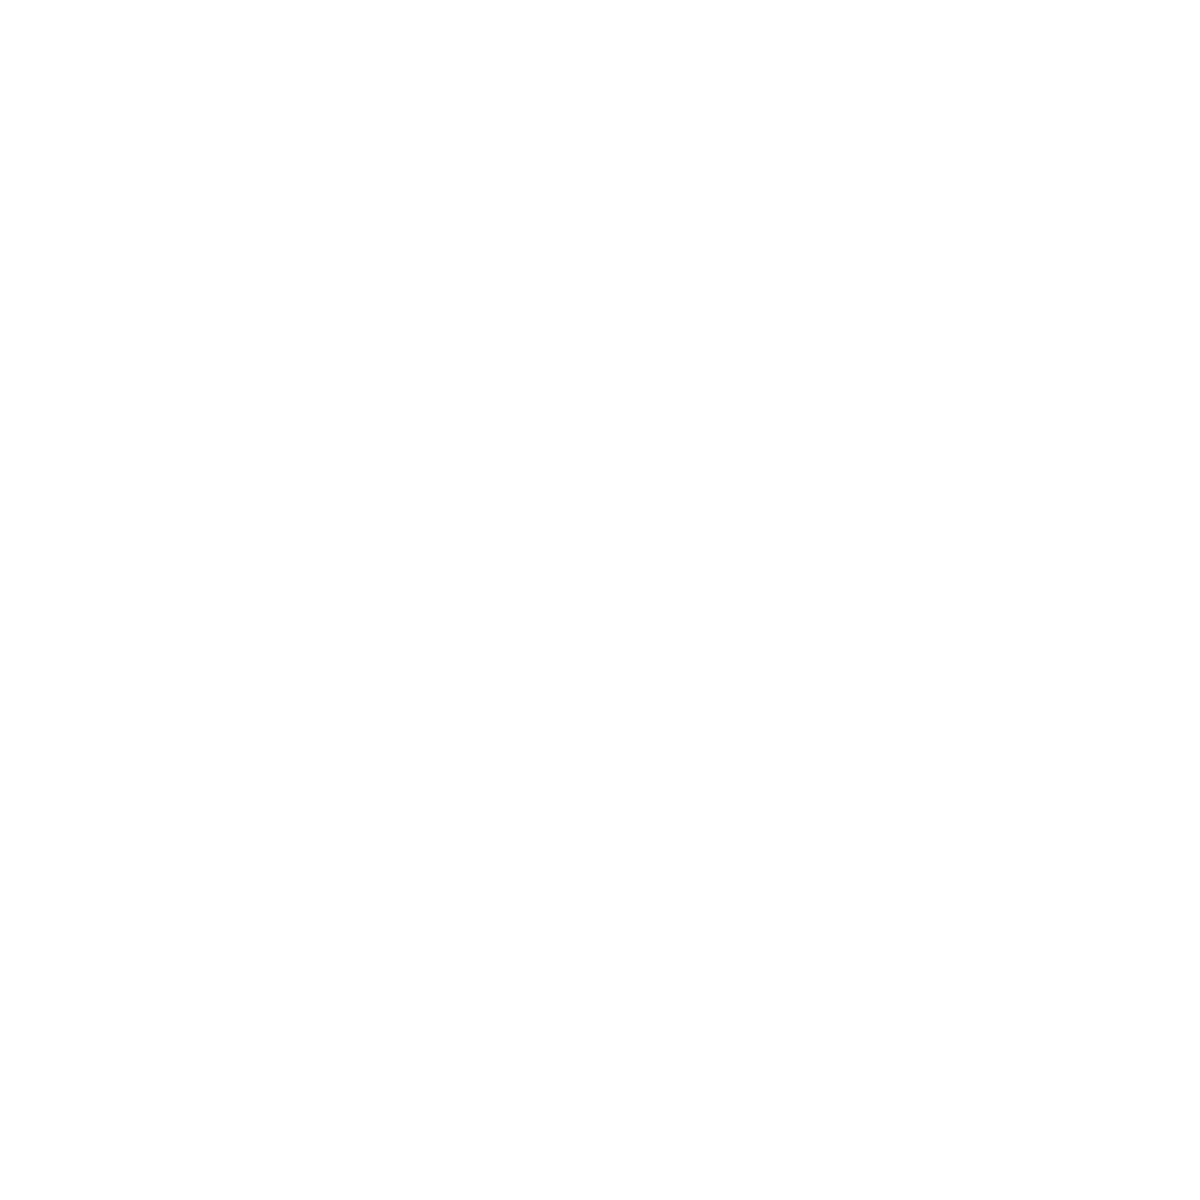 Will's radio